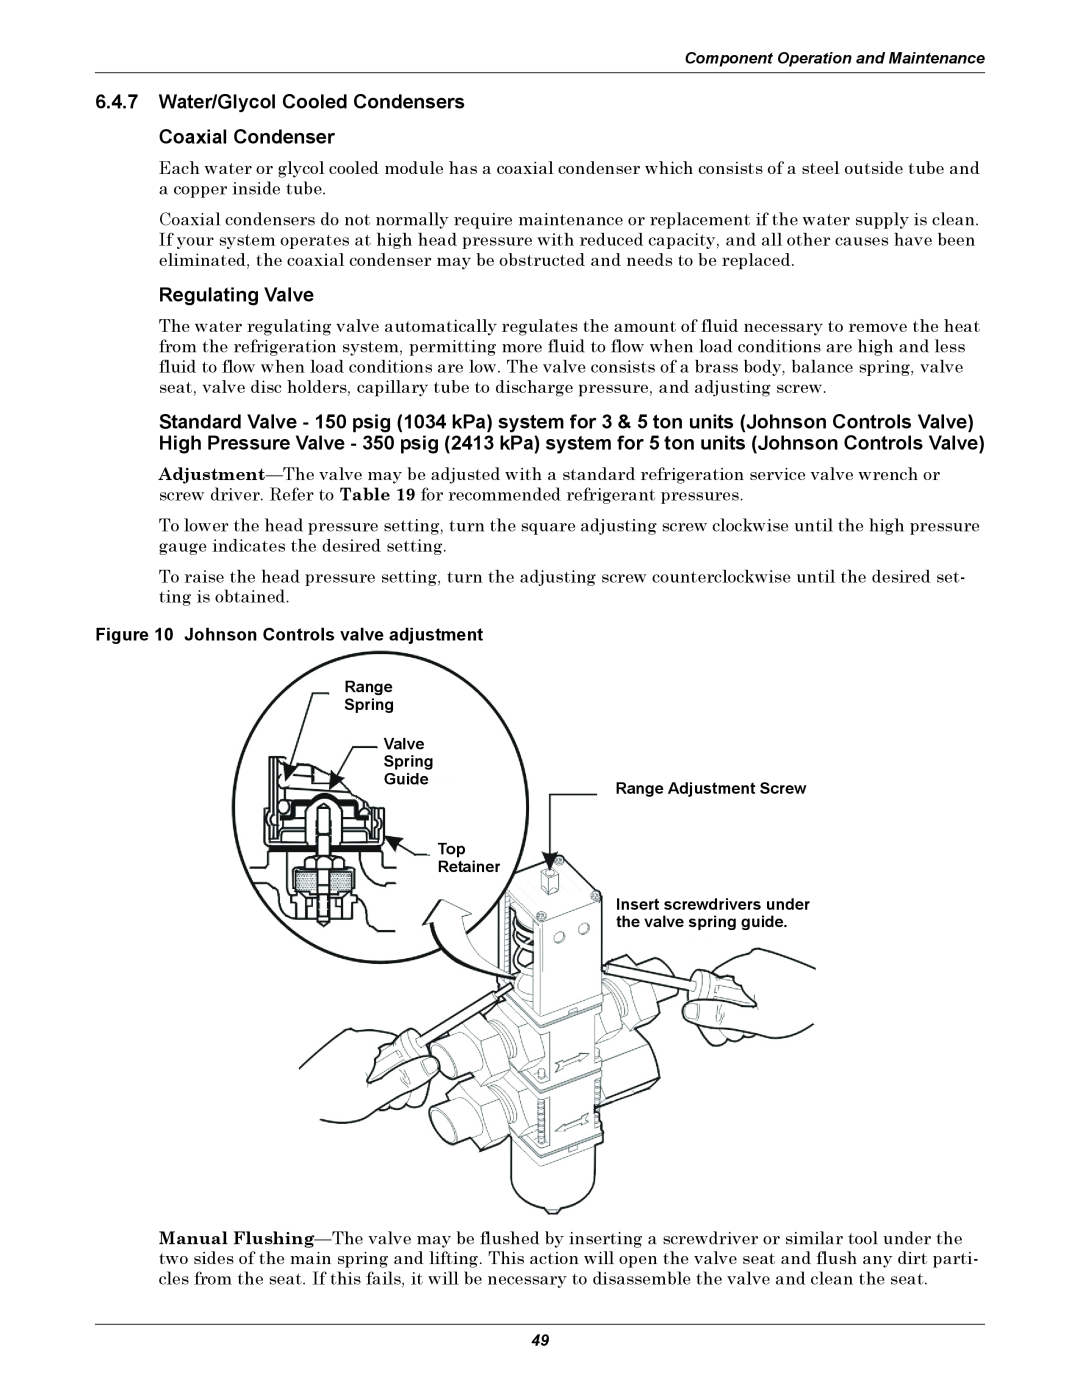 Liebert 3000 manual Regulating Valve, Johnson Controls valve adjustment 